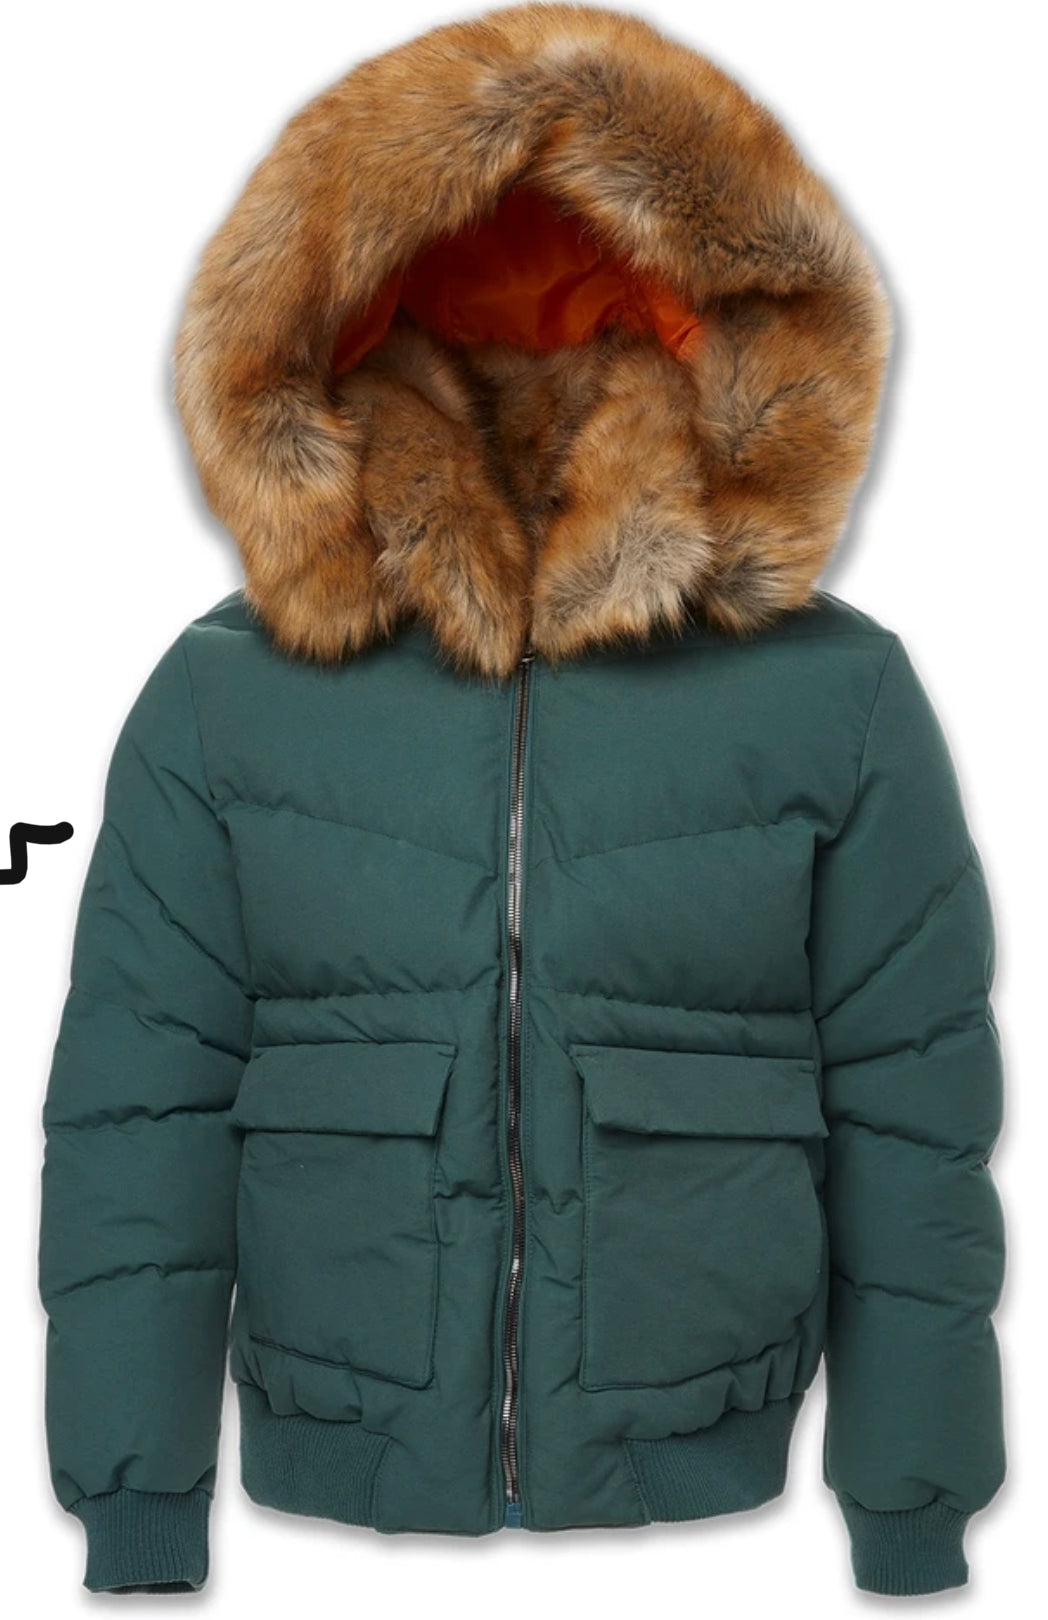 Jordan Craig Hollis Canvas Puffer jacket w fur hood  Green 91541m